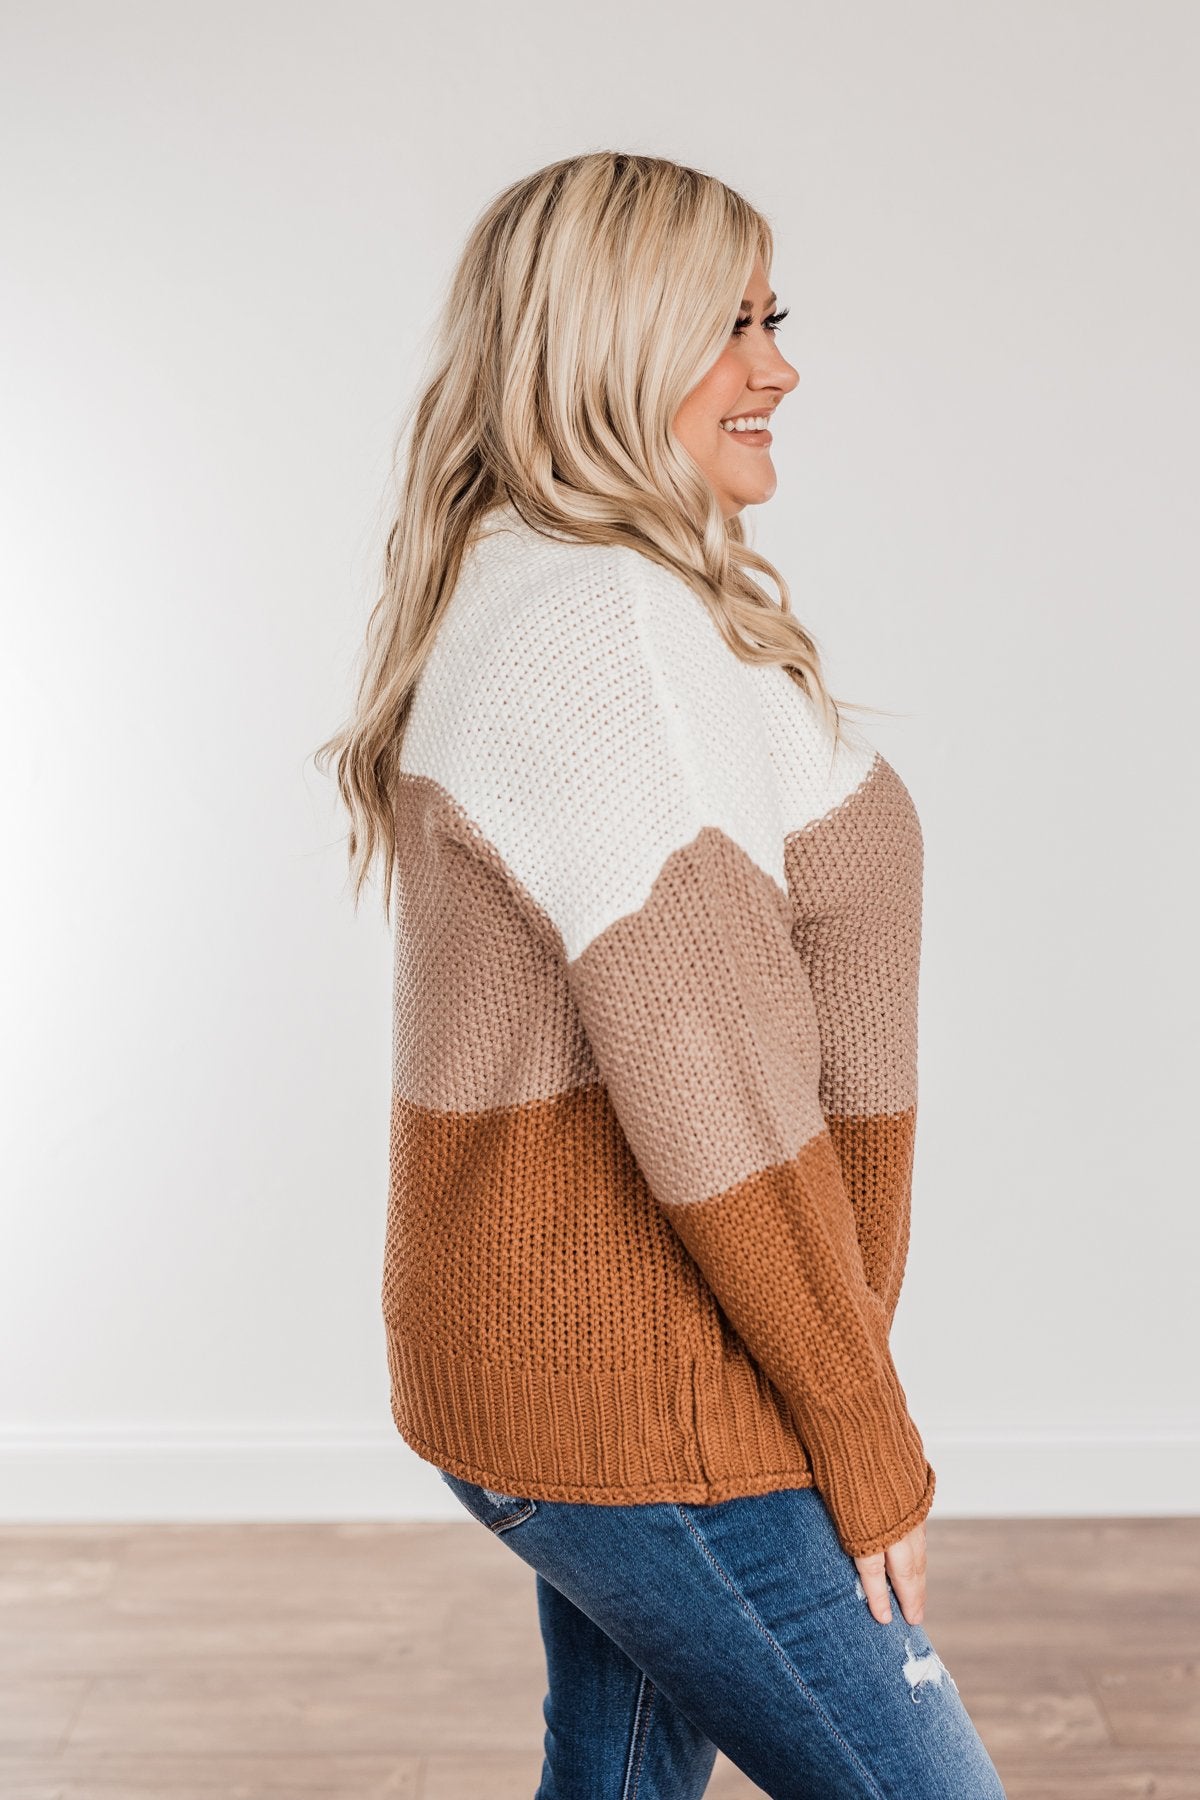 Warm & Toasty Color Block Knit Sweater- Mocha & Rust